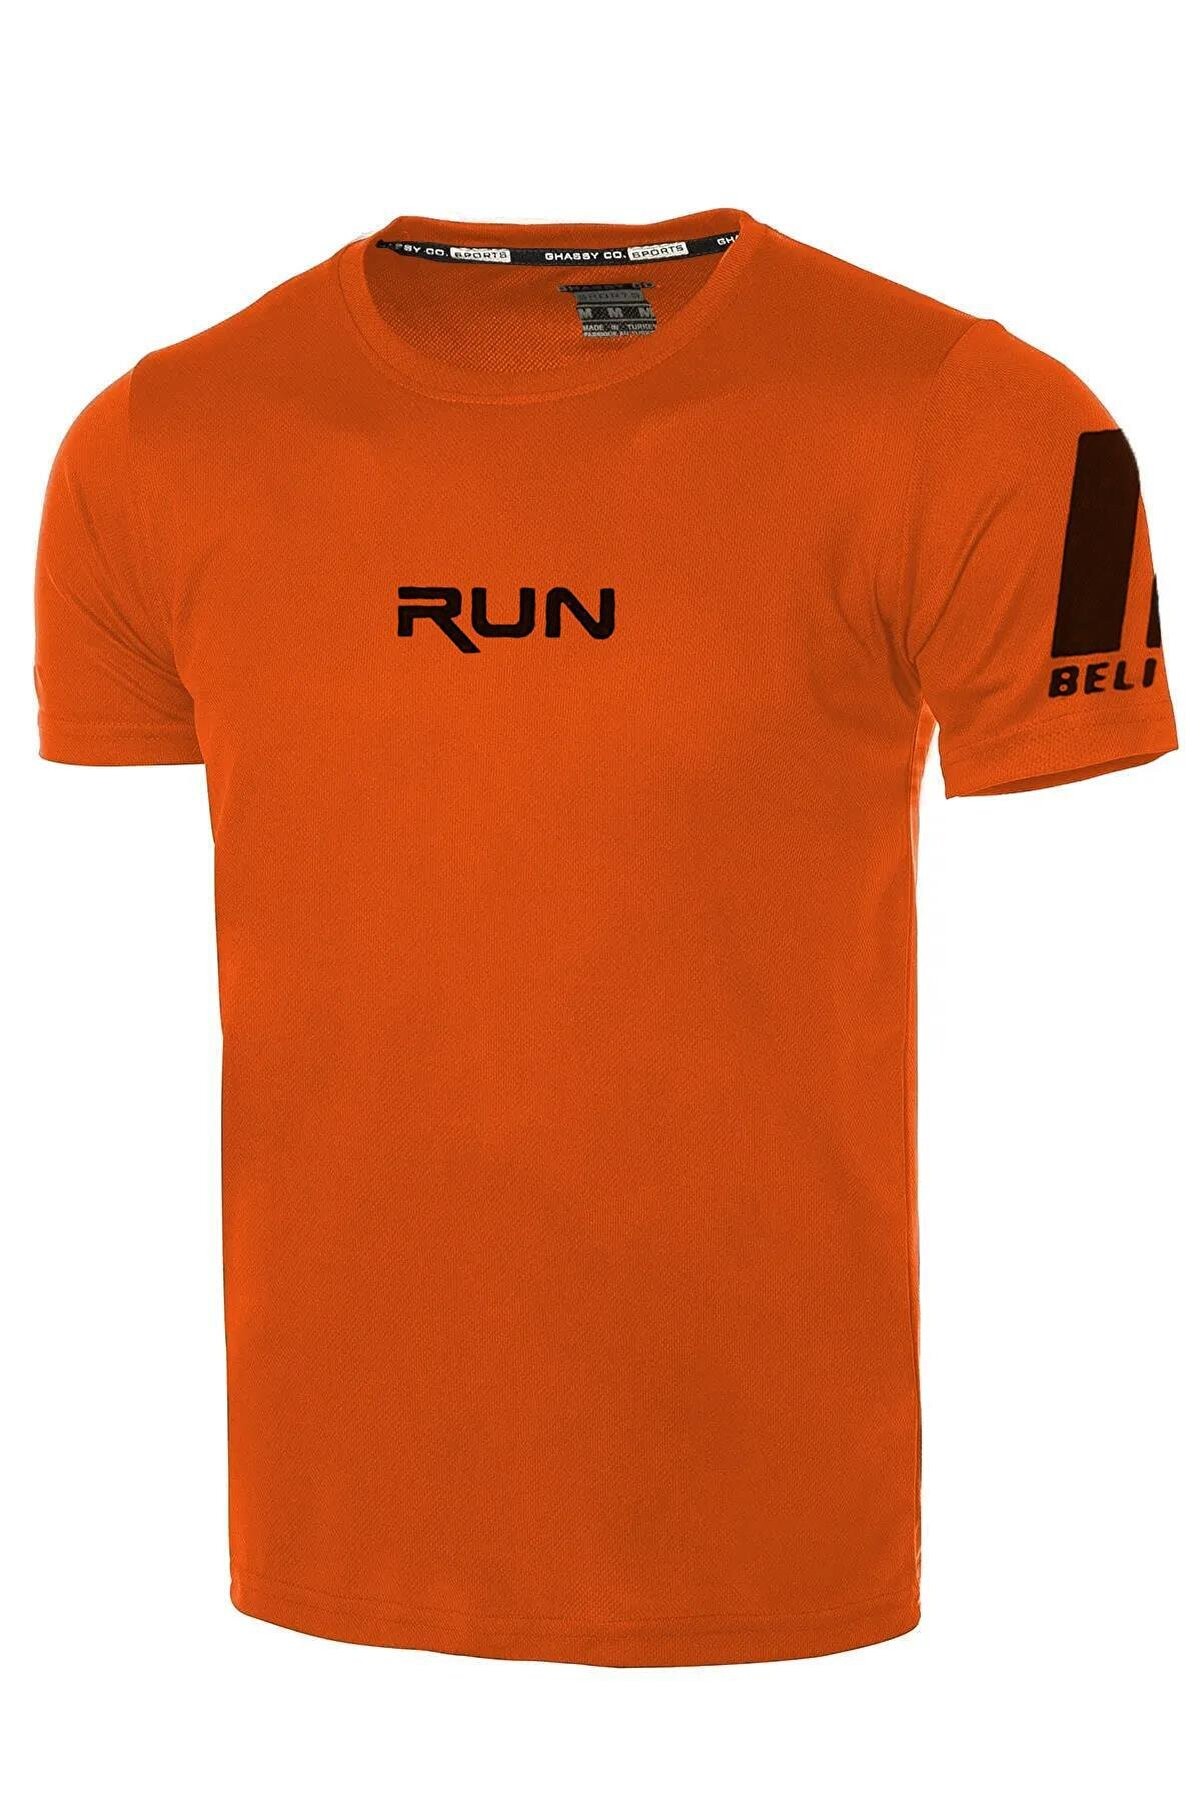 Ghassy Co Ghassy Co. Erkek Nem Emici Hızlı Kuruma Performans Running Spor T-shirt - TURUNCU